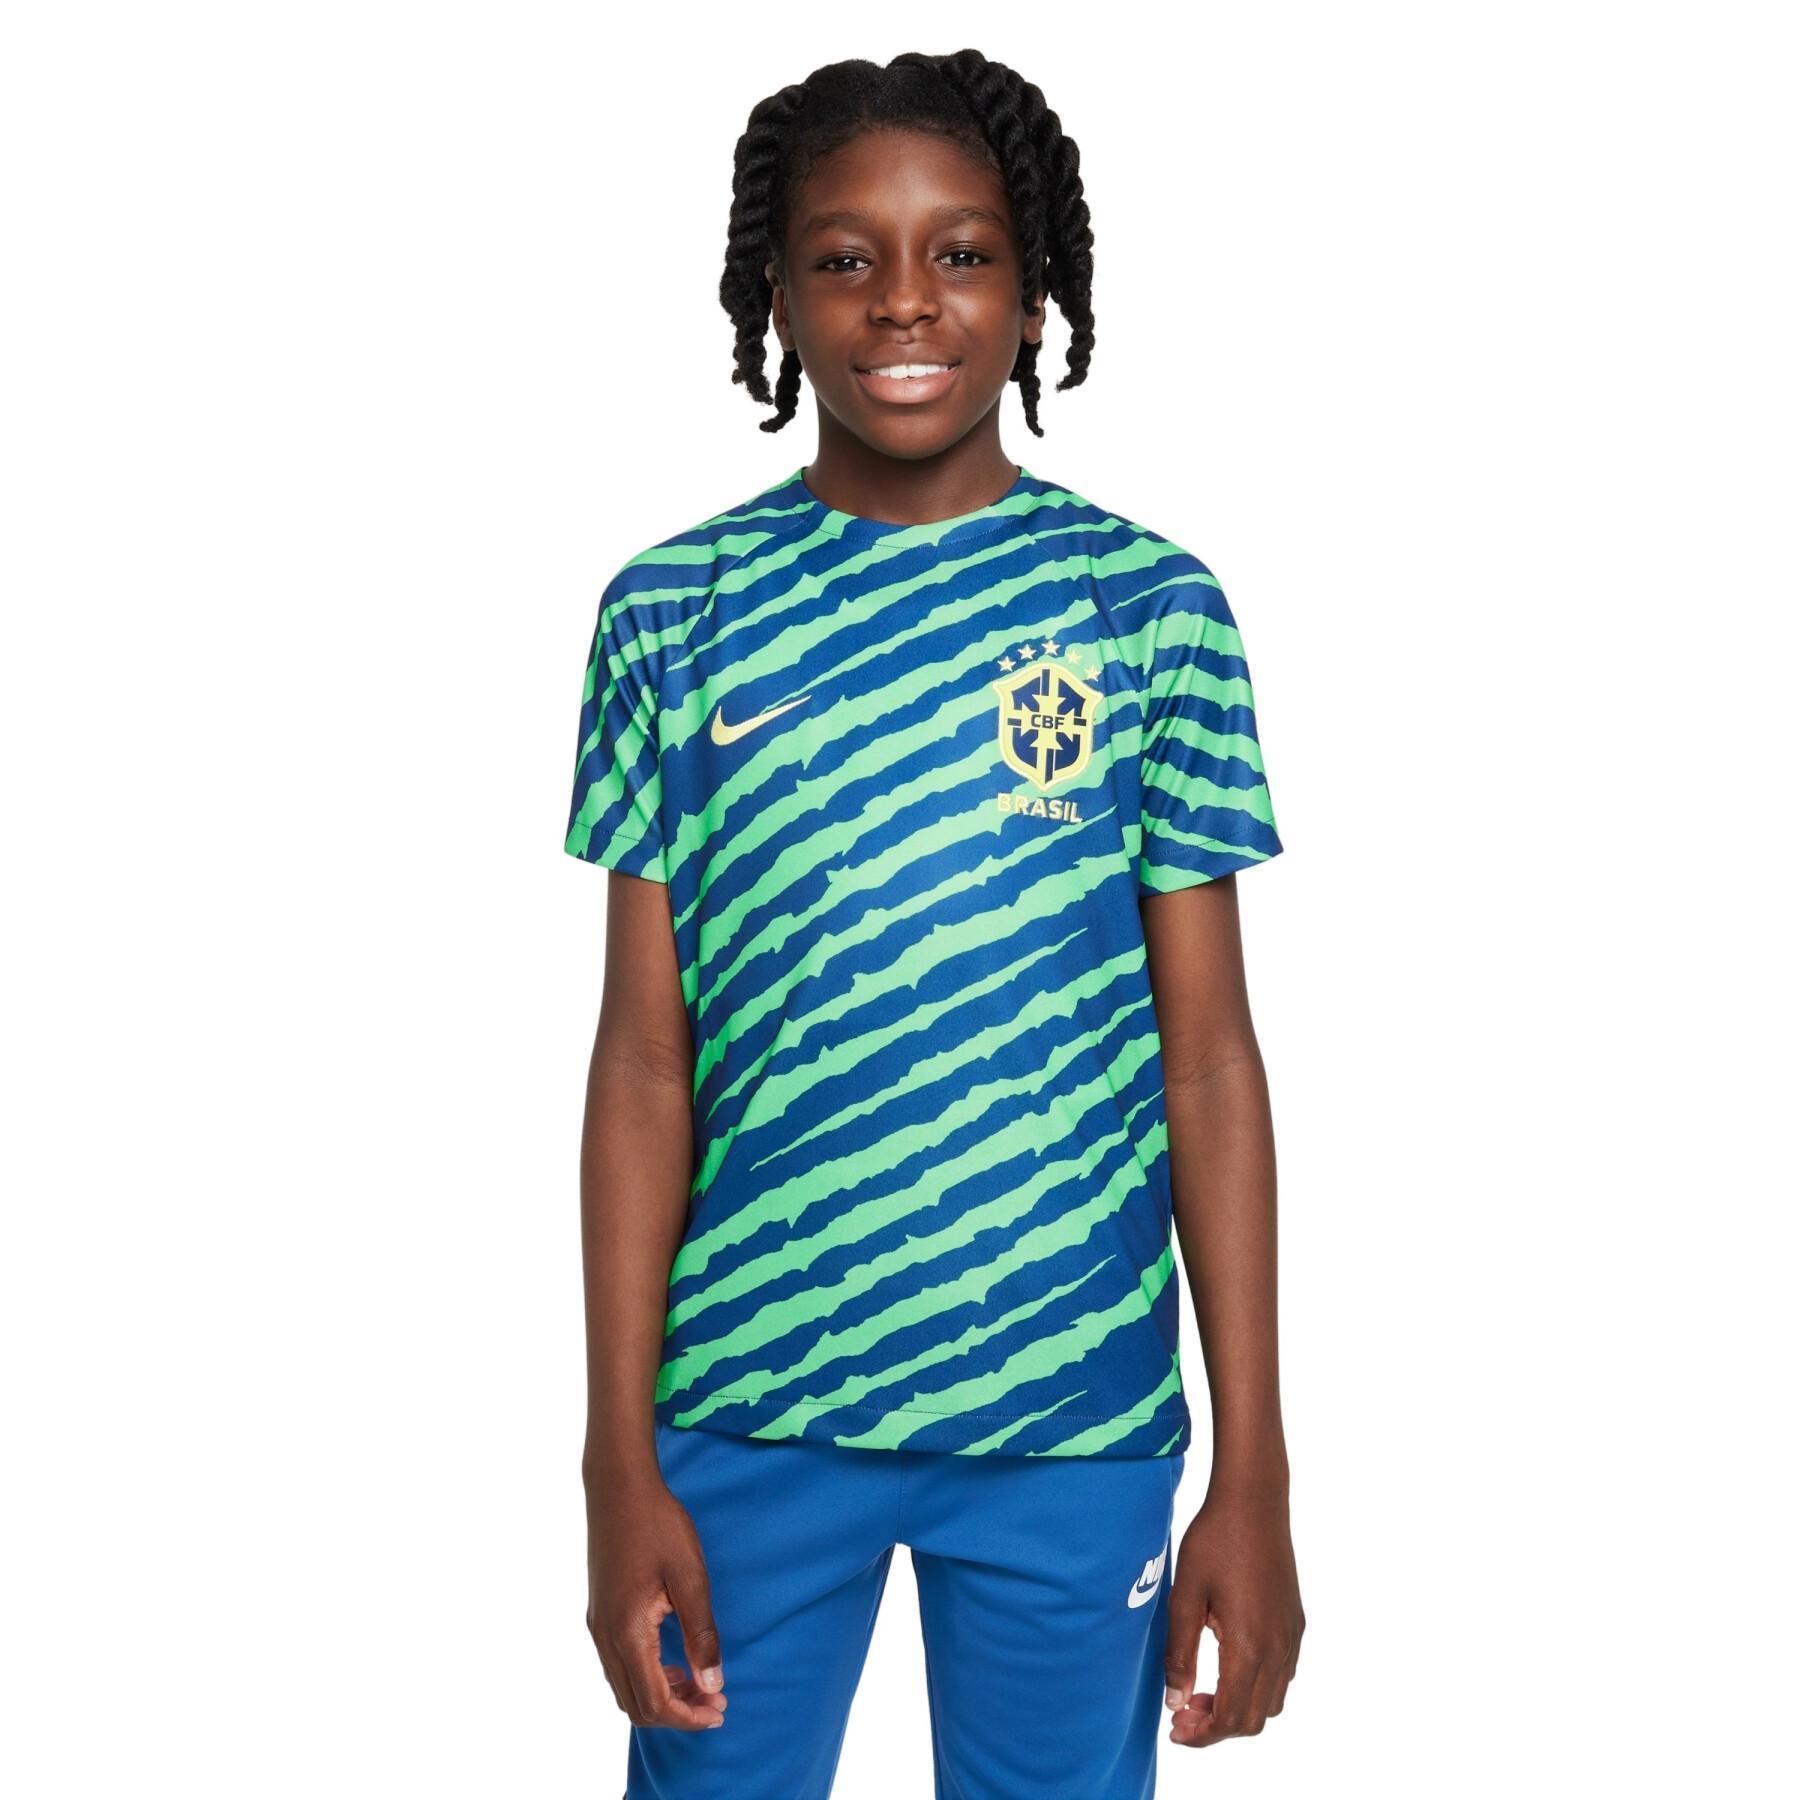 Camiseta premundial 2022 para niños Brésil